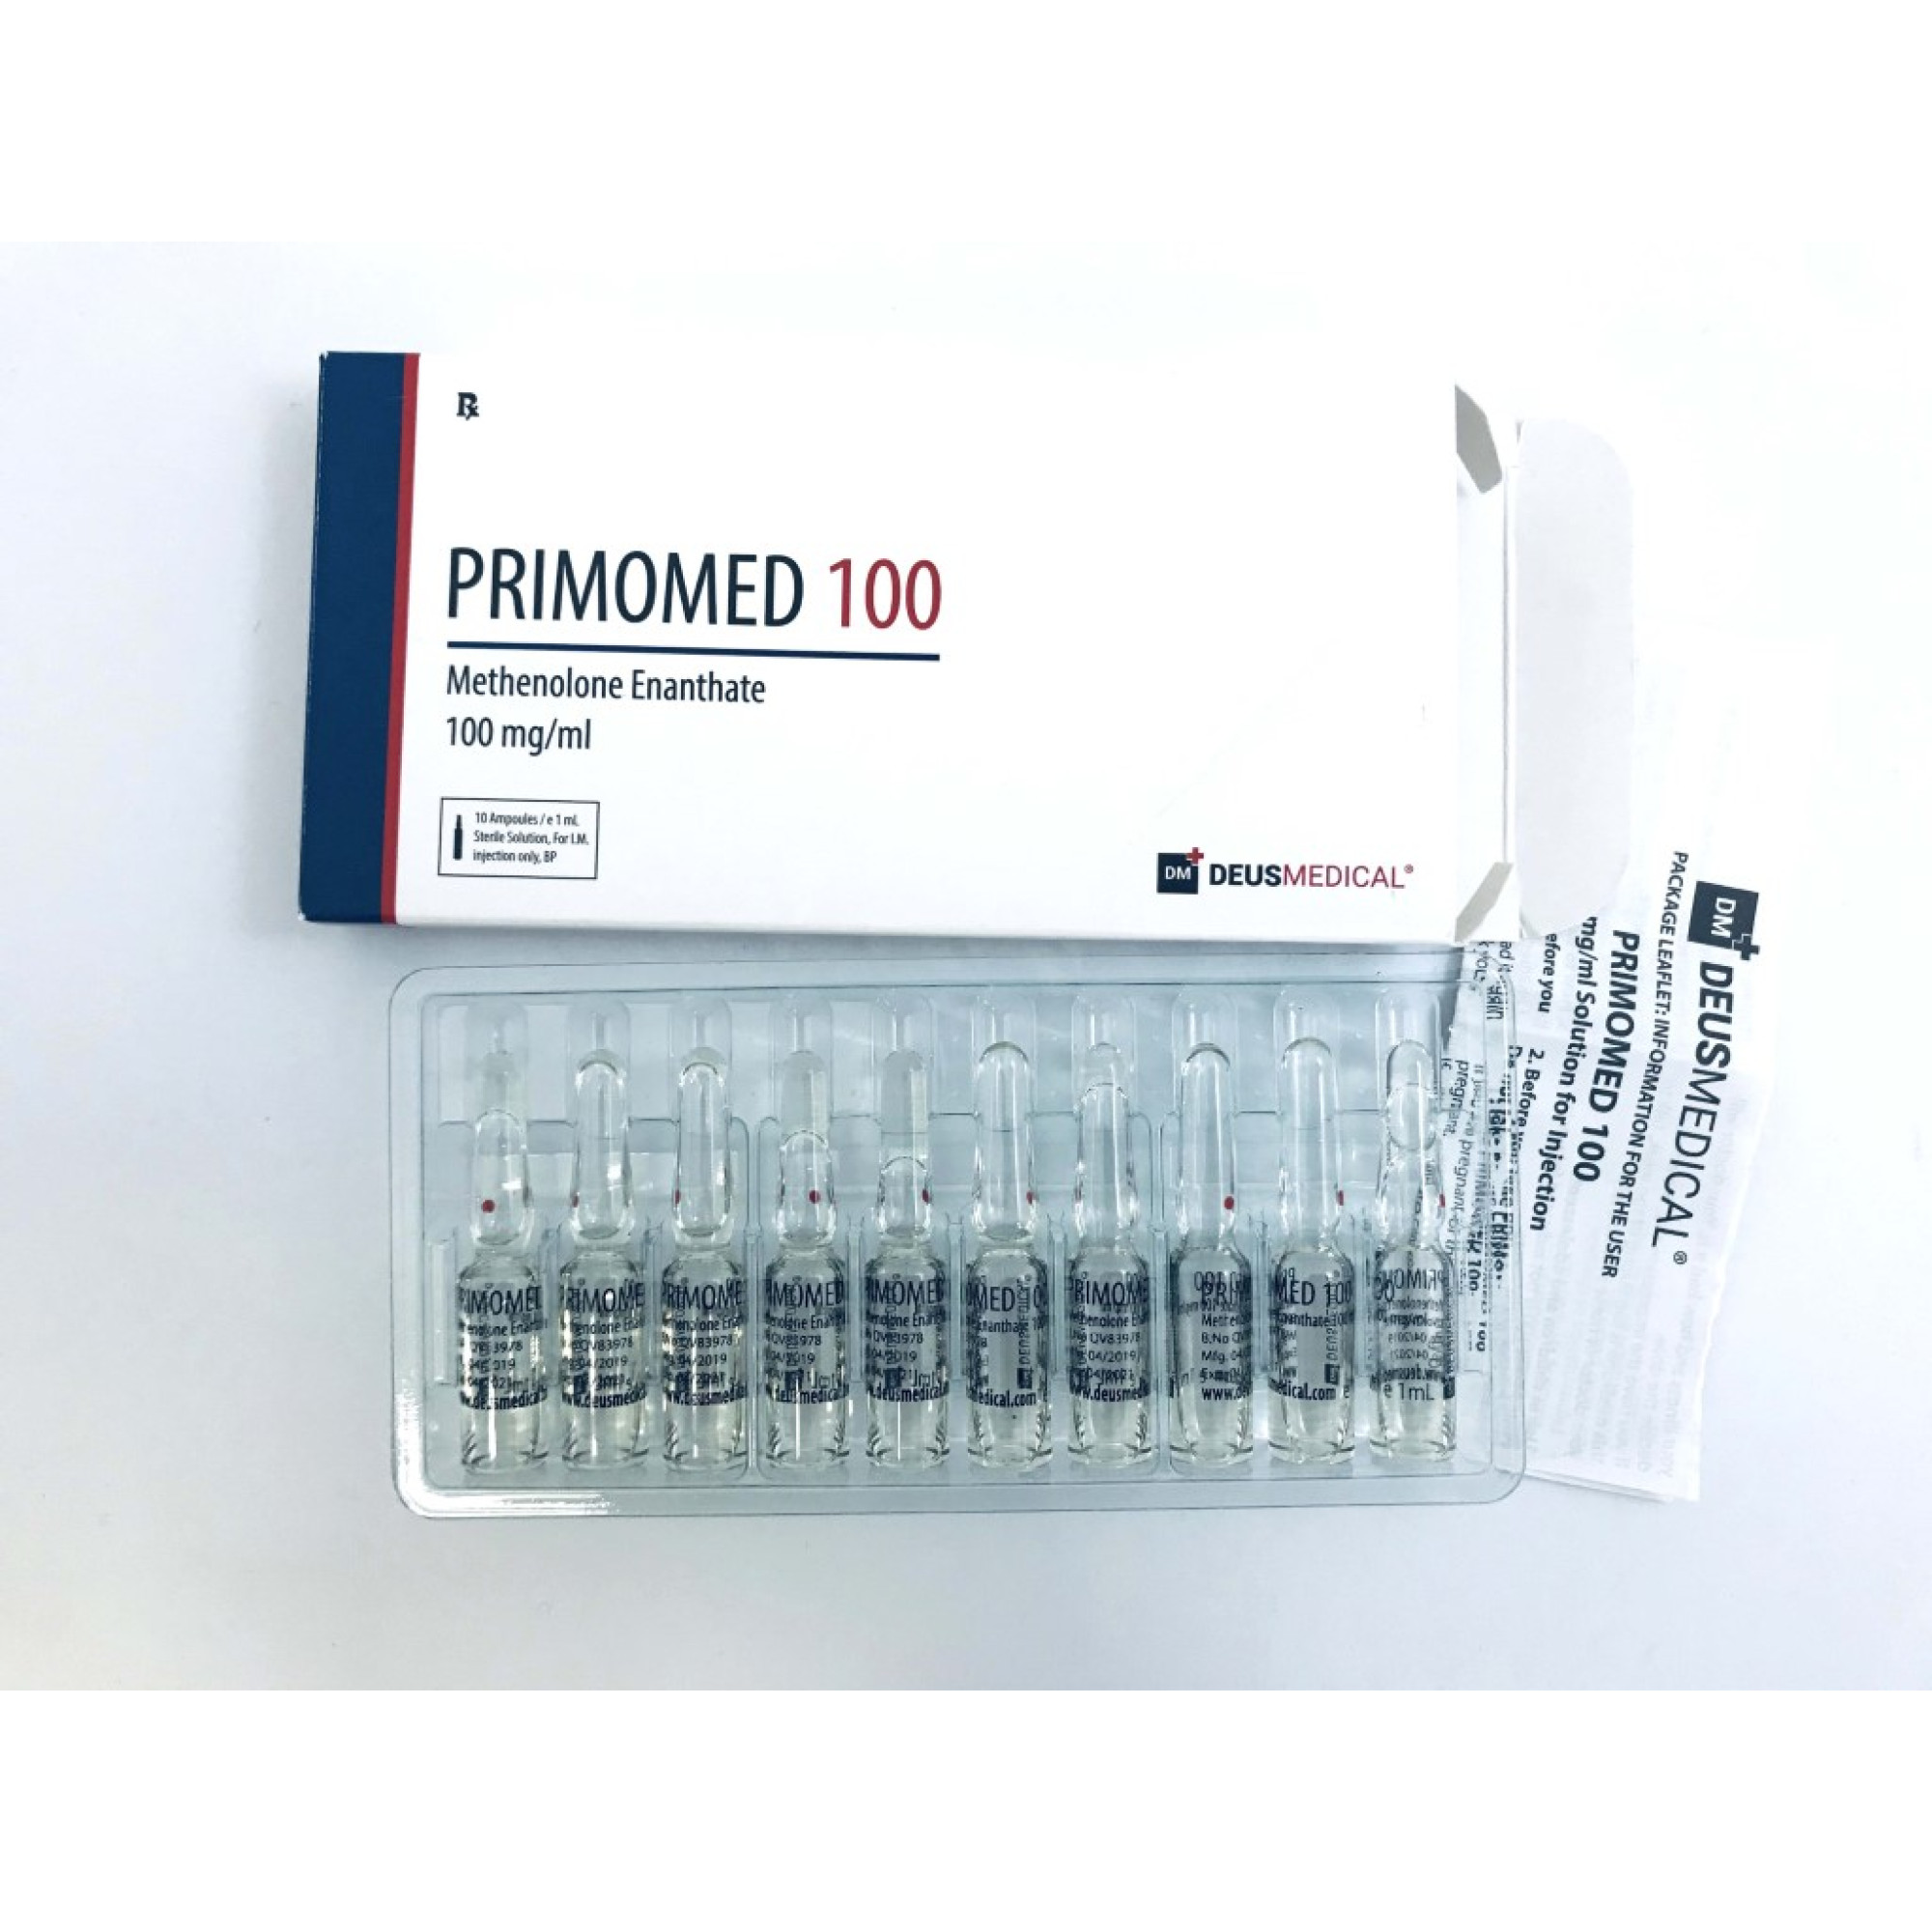 PRIMOMED 100 (Methenolone Enanthate), Deus Medical, Buy Steroids Online - www.deuspower.shop